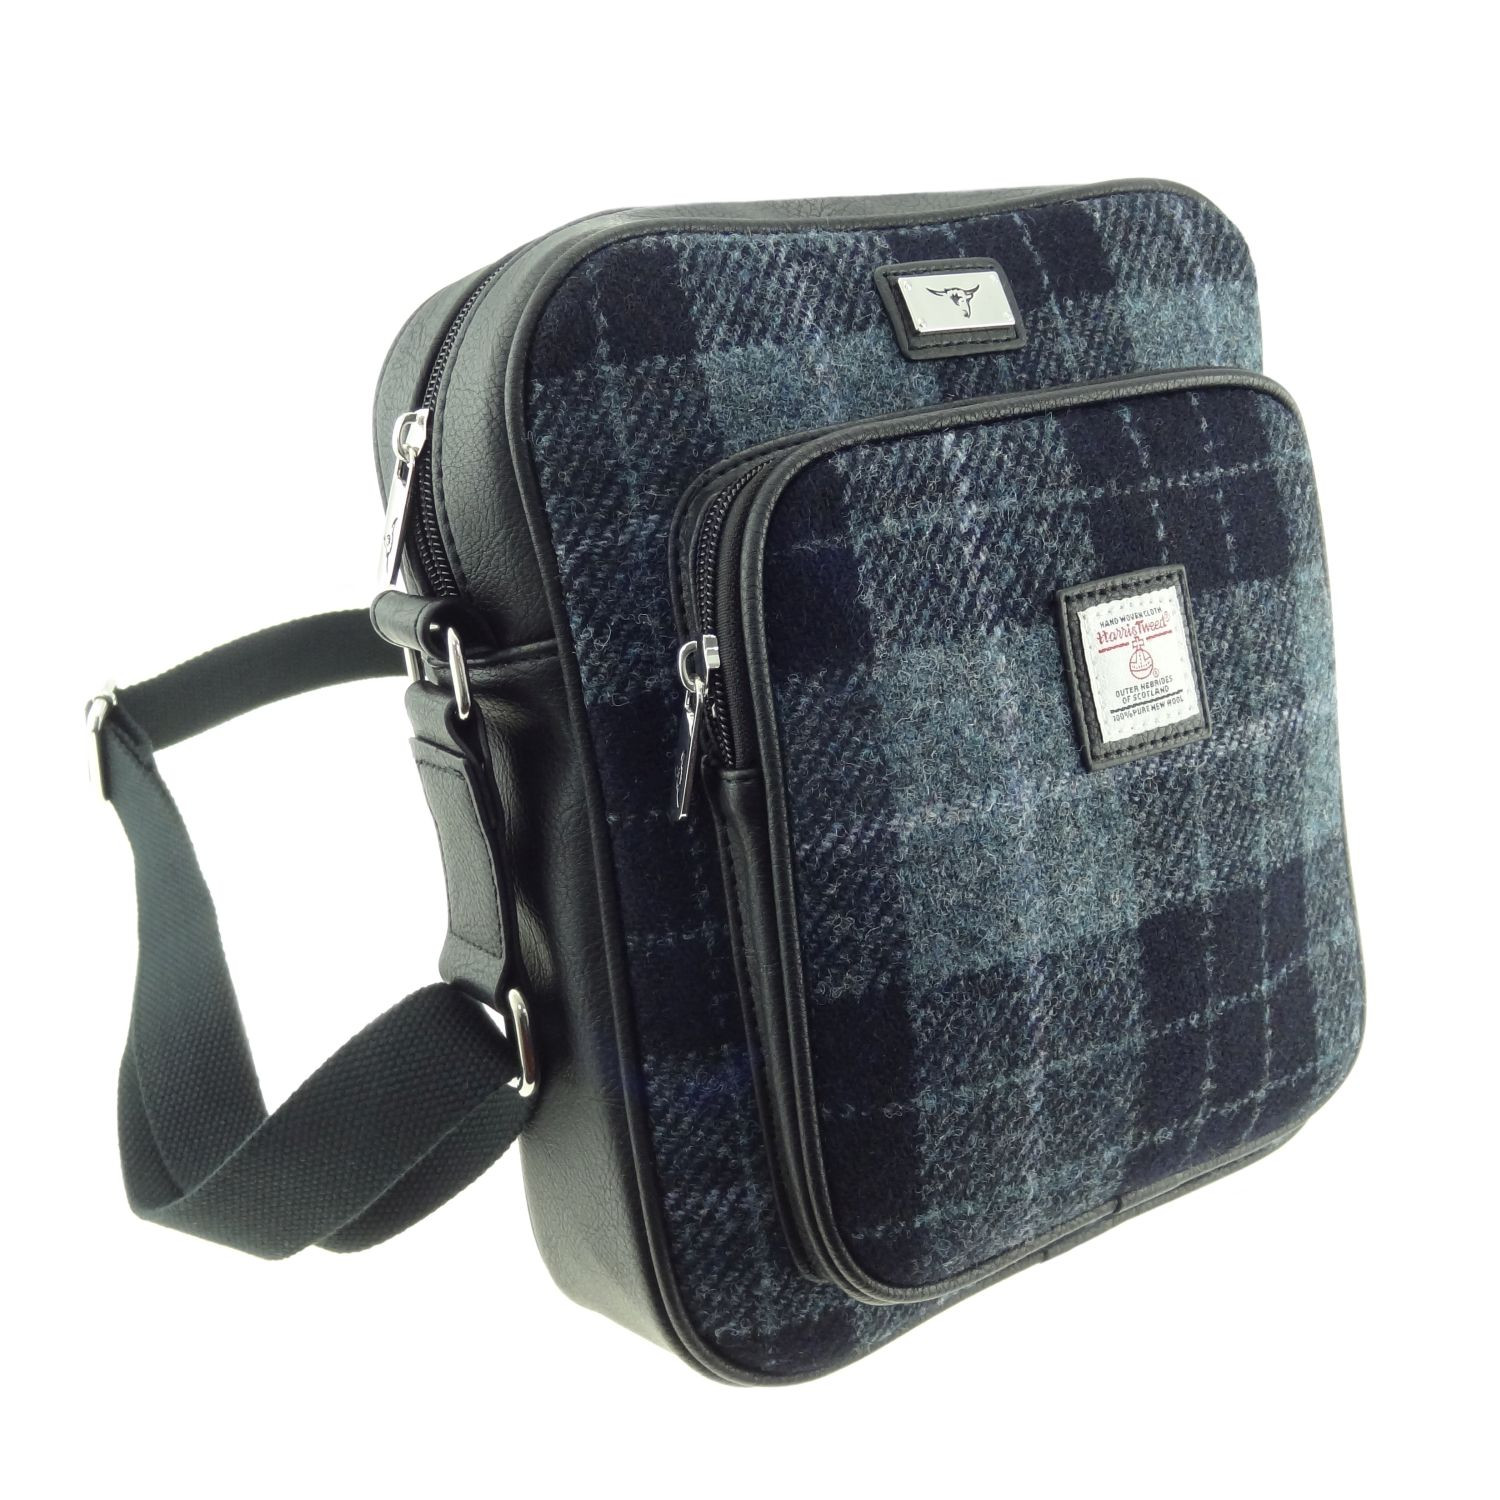 TSANTA Printed Canvas Tote Bag | Printed handbag for women | College Bag |  Reusable shopping